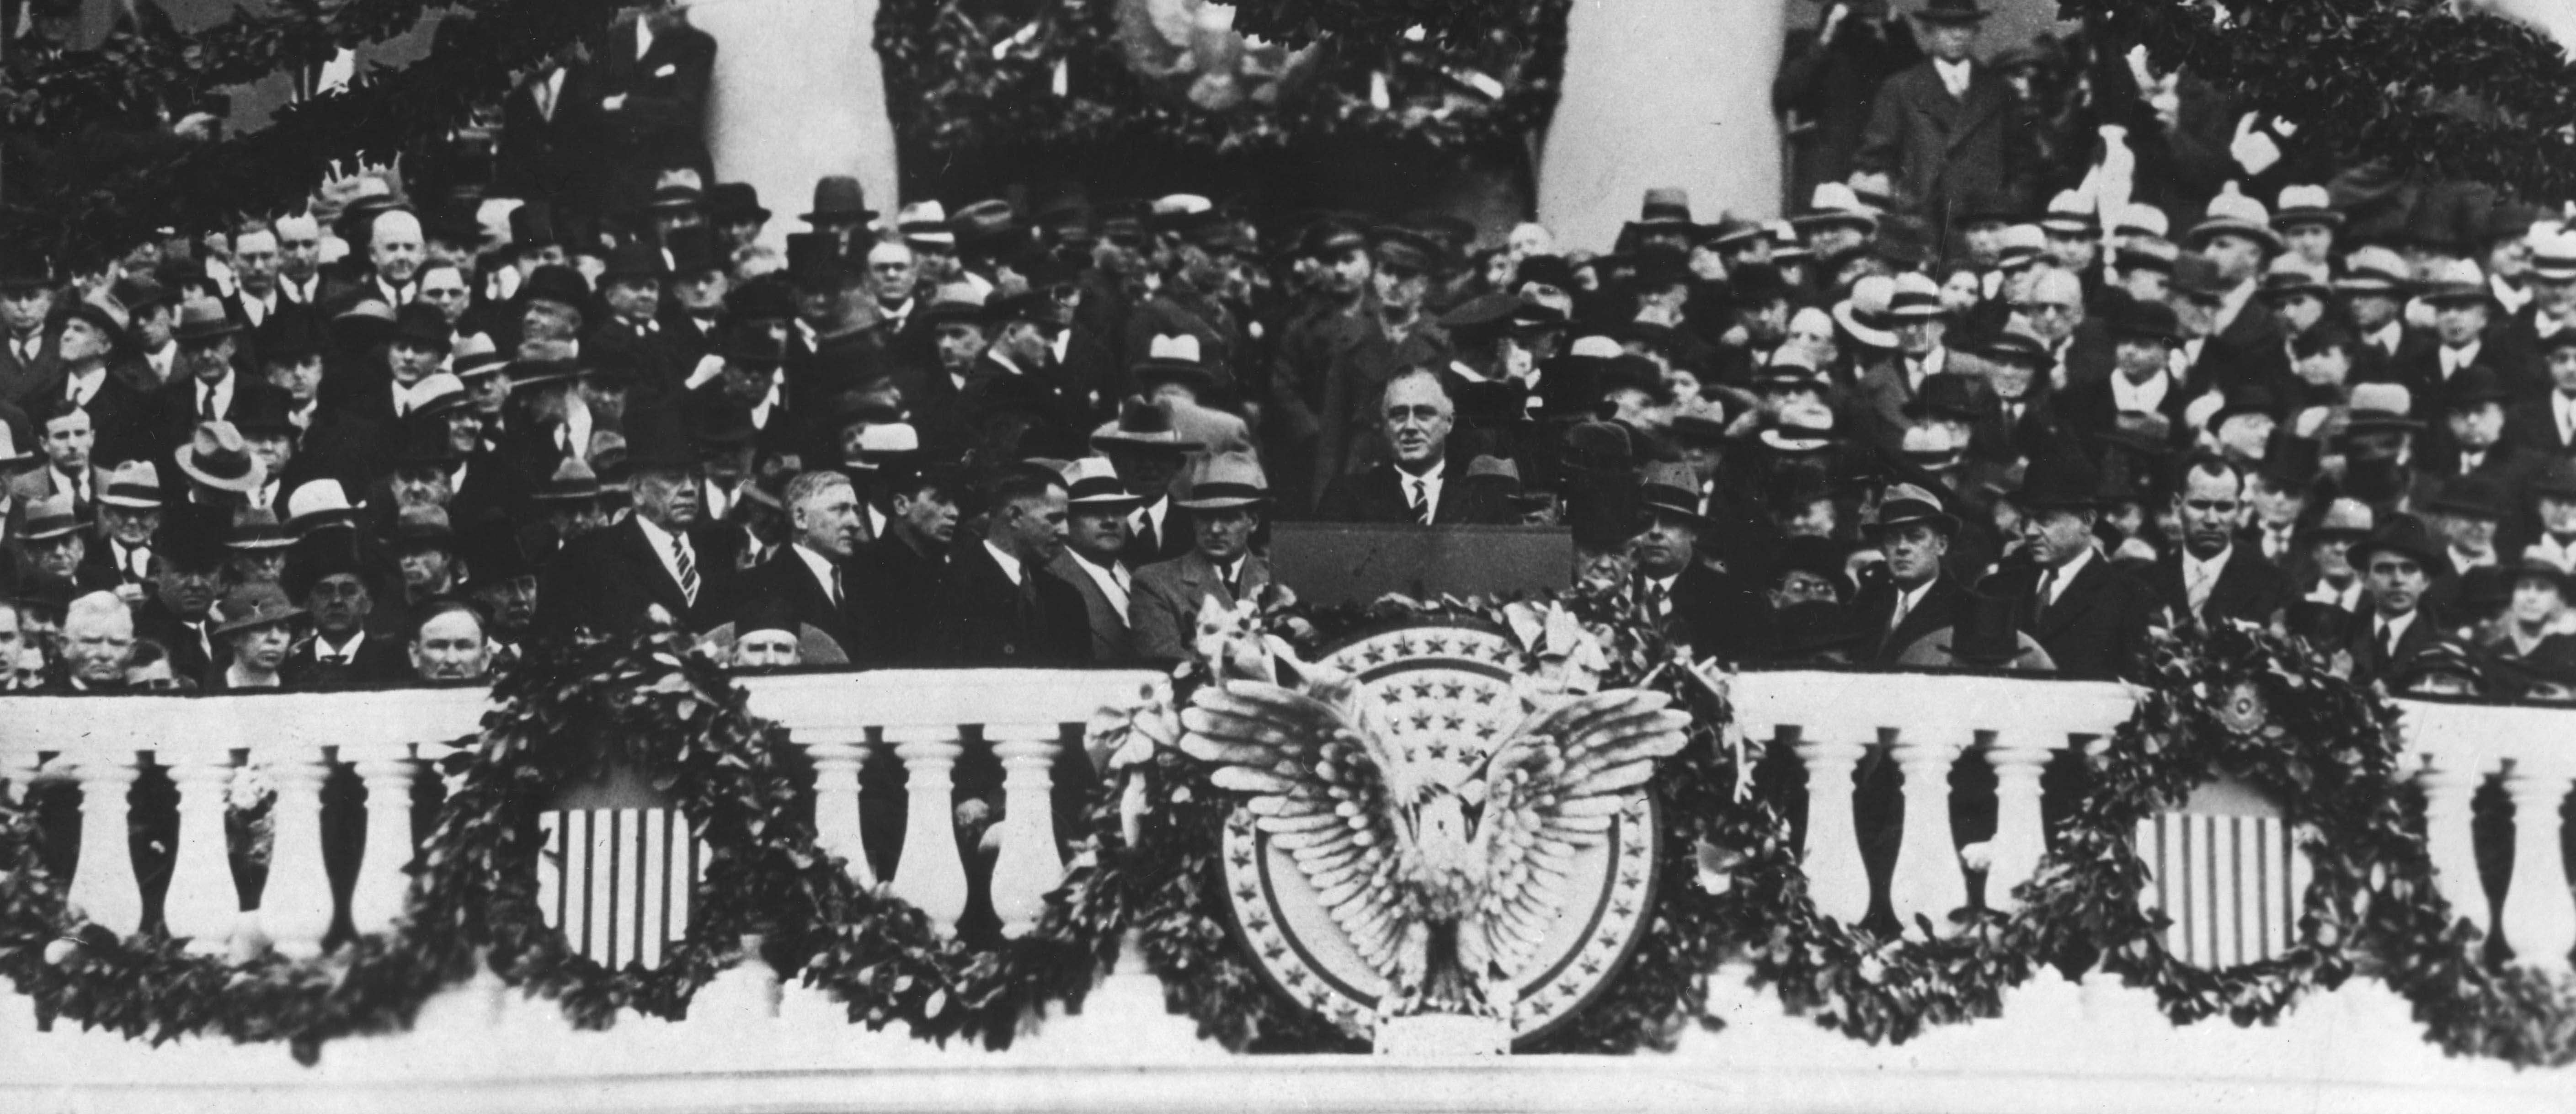 Harry Truman addresses a crowd